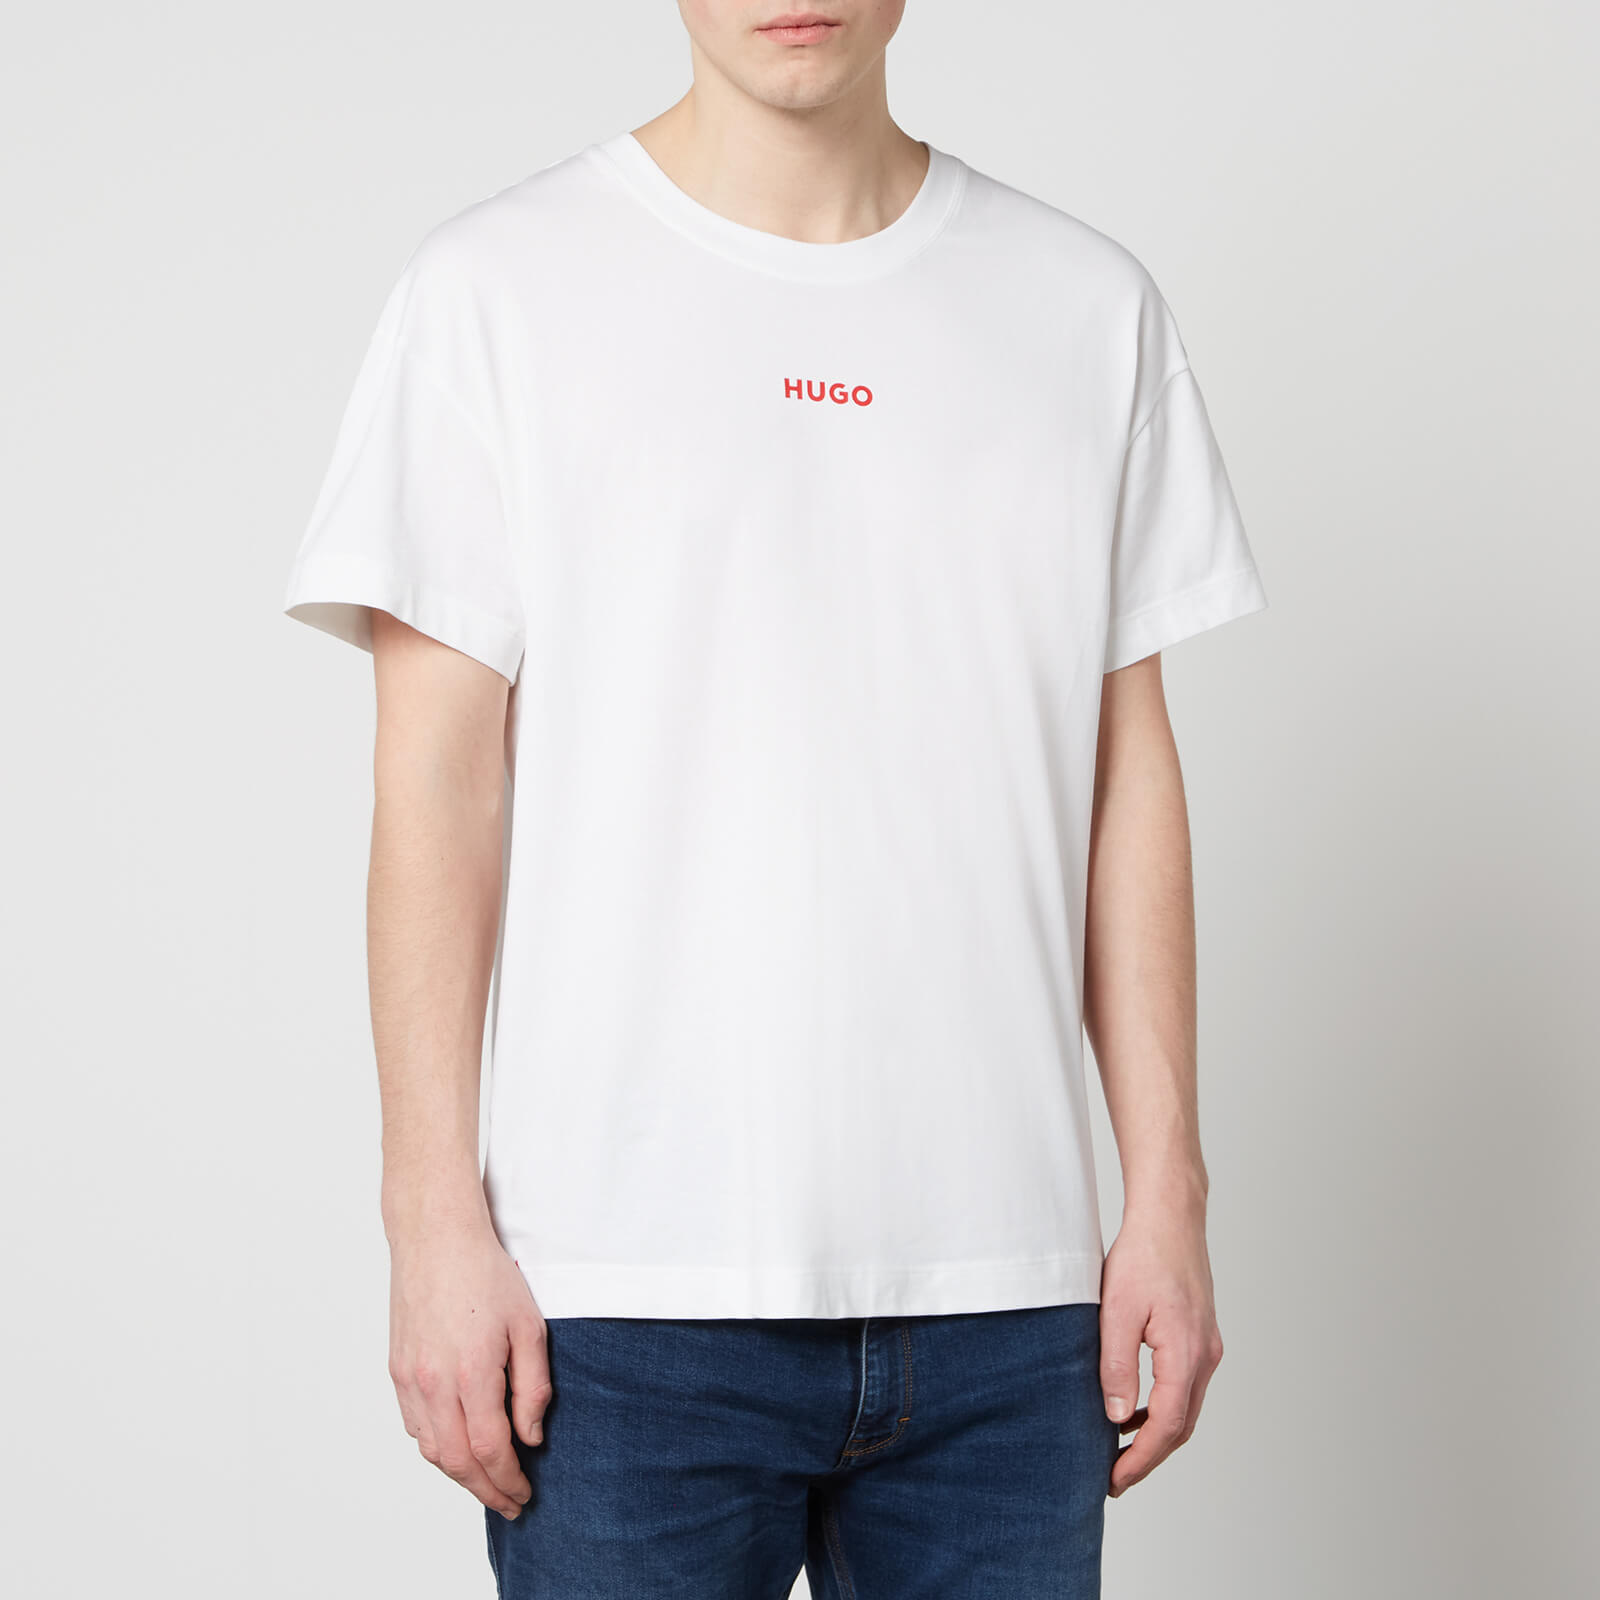 HUGO Bodywear Logo-Printed Cotton-Blend Jersey T-Shirt